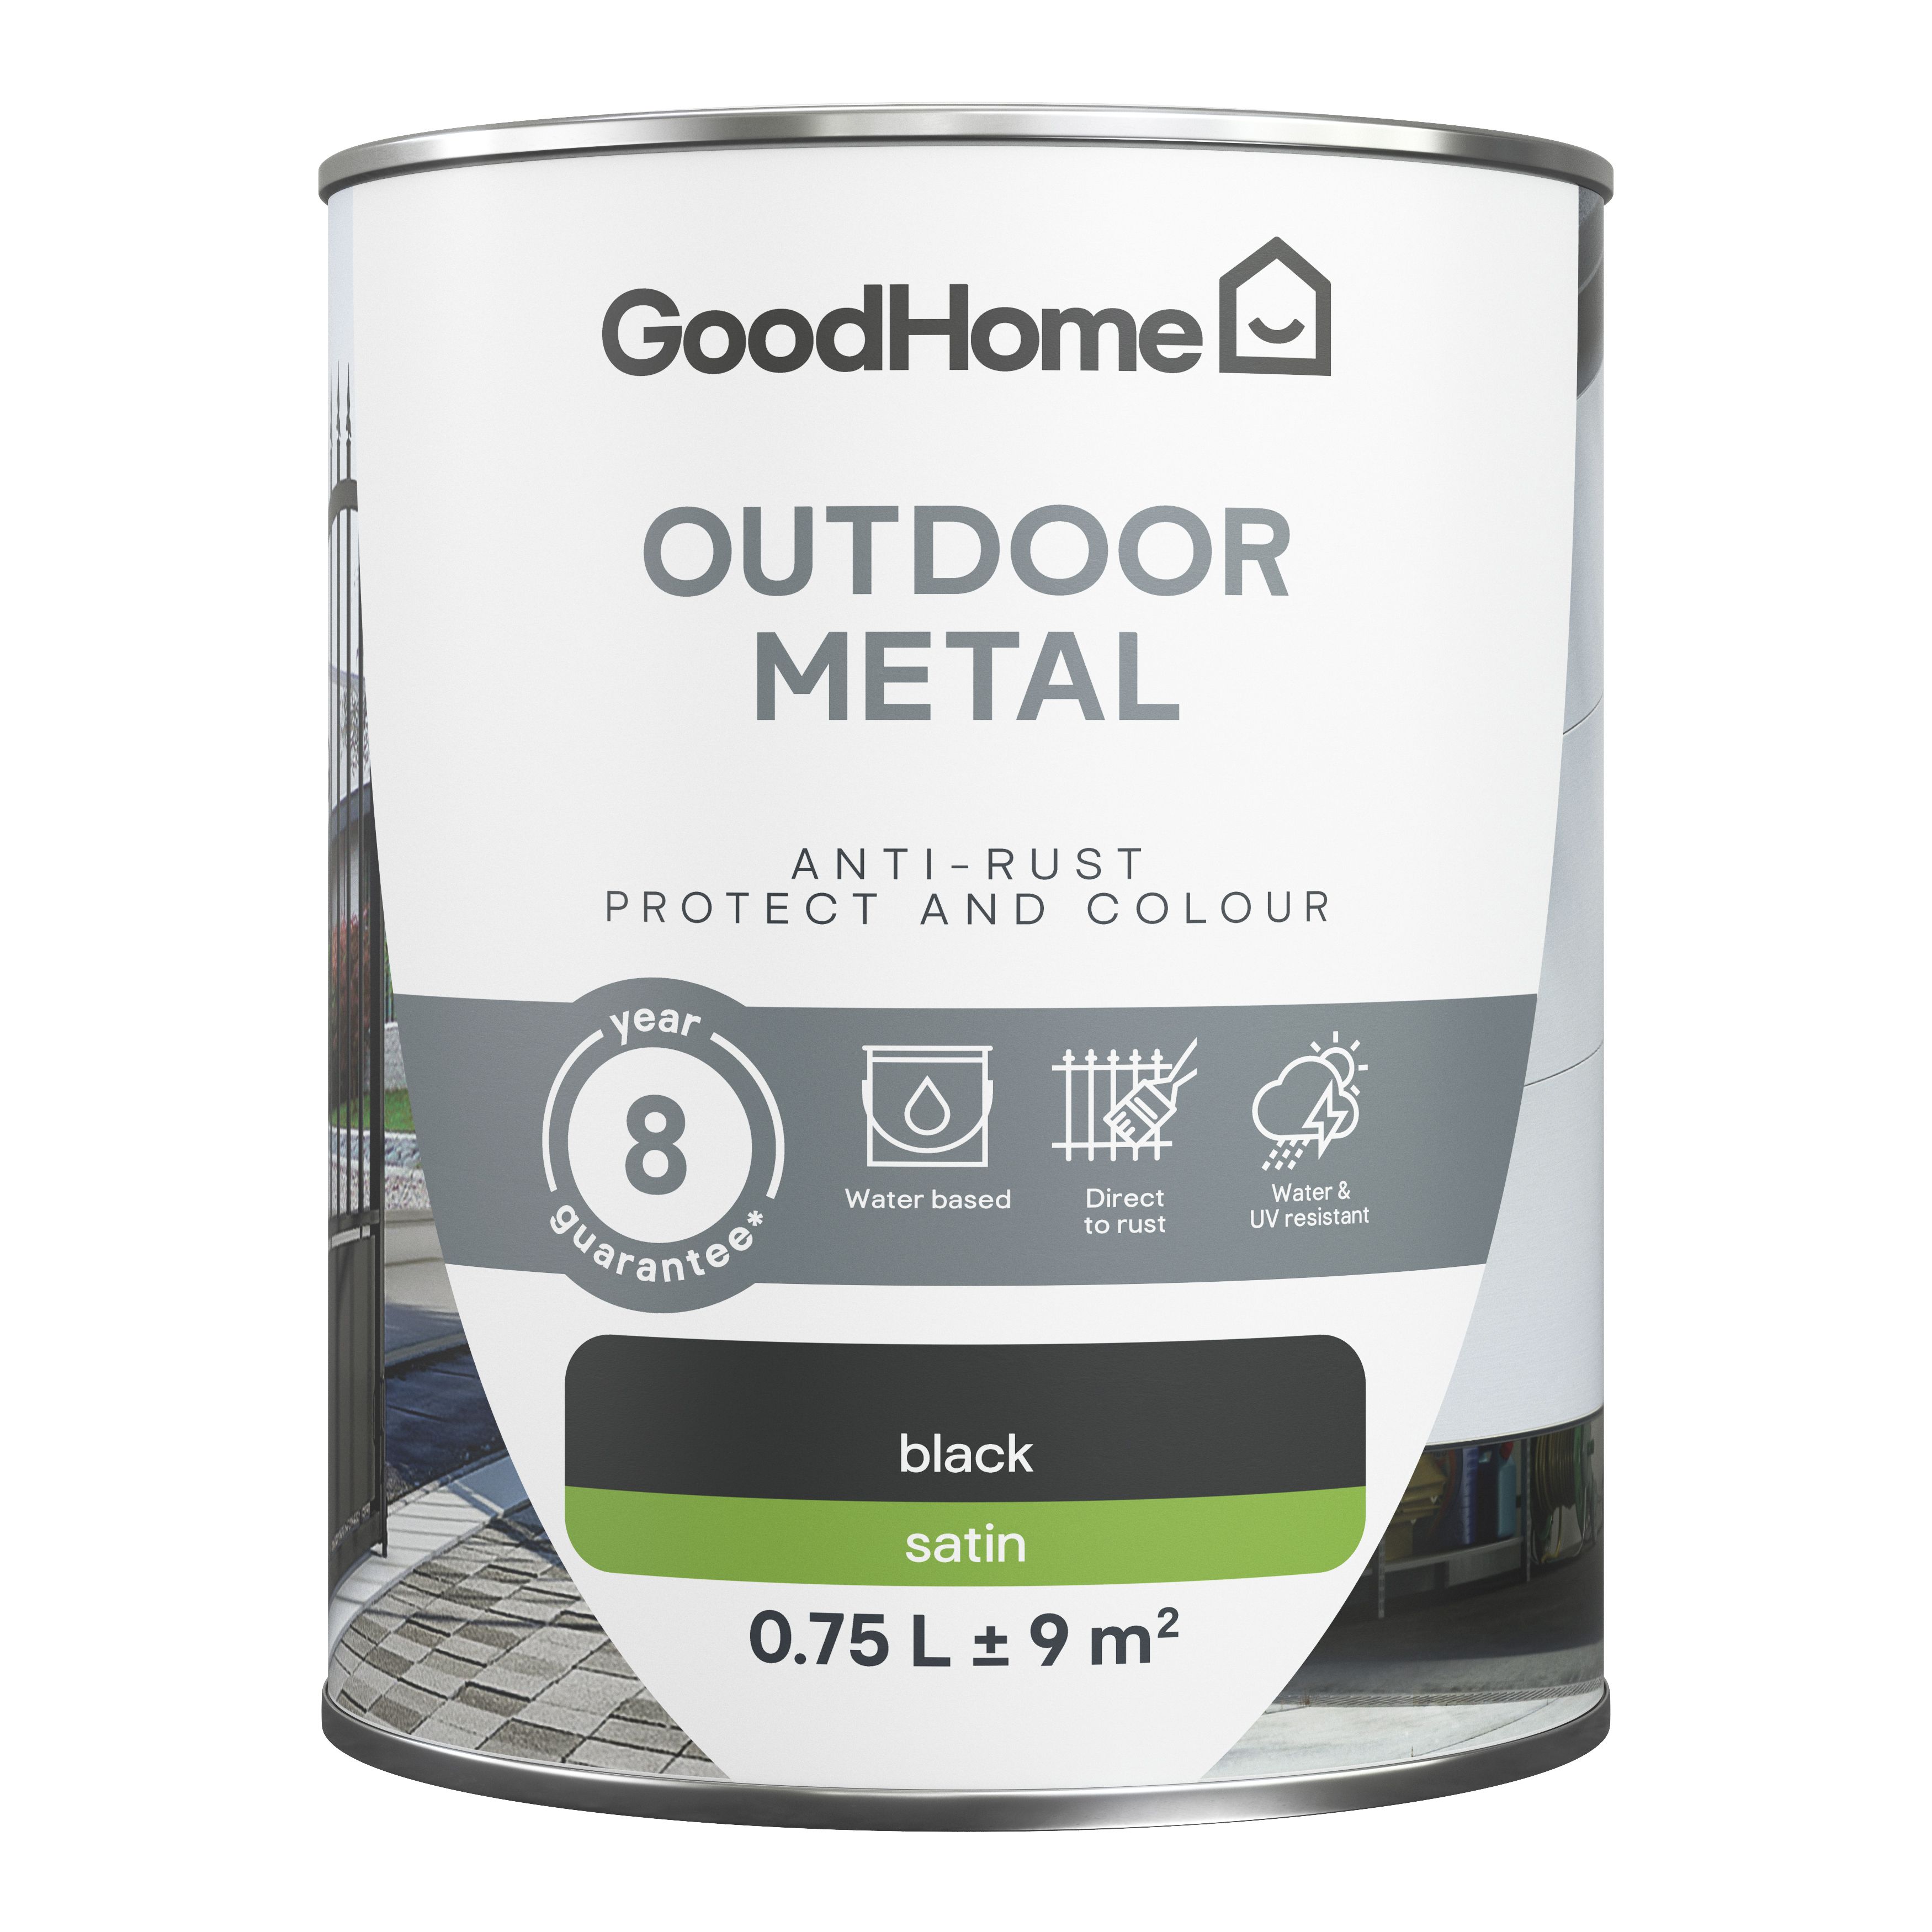 GoodHome Outdoor Black Satinwood Exterior Metal paint, 750ml Tin